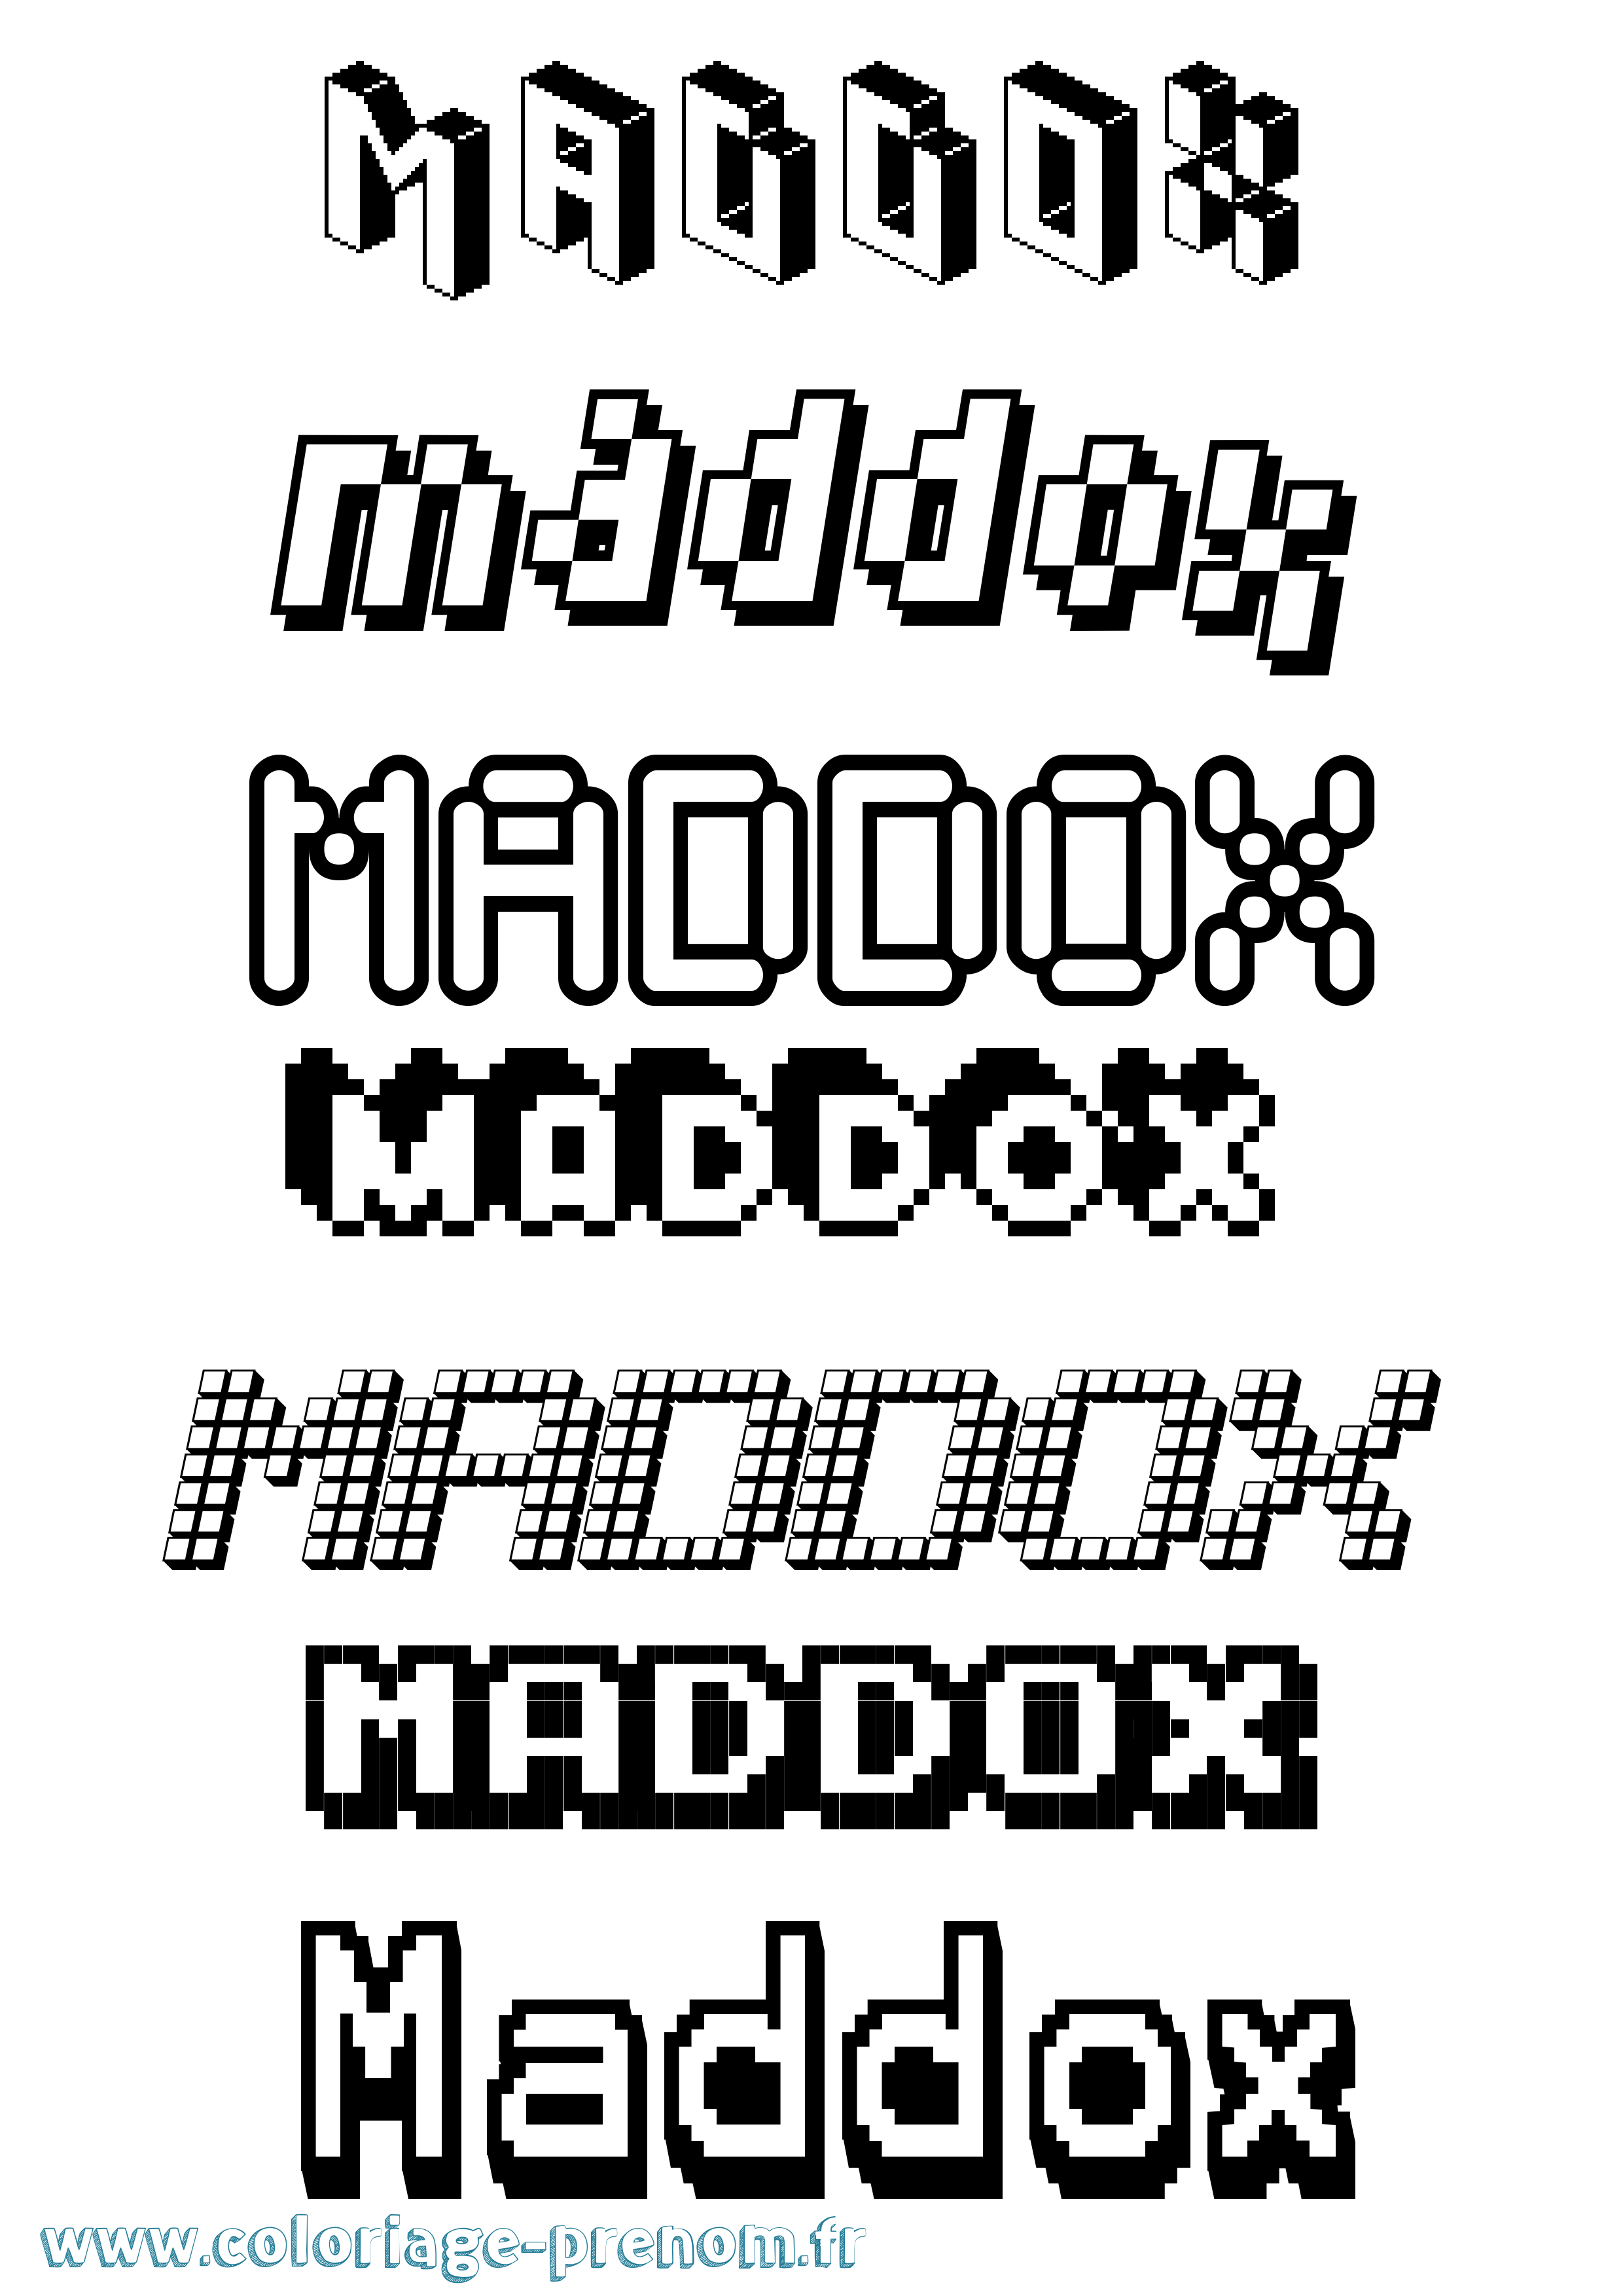 Coloriage prénom Maddox Pixel